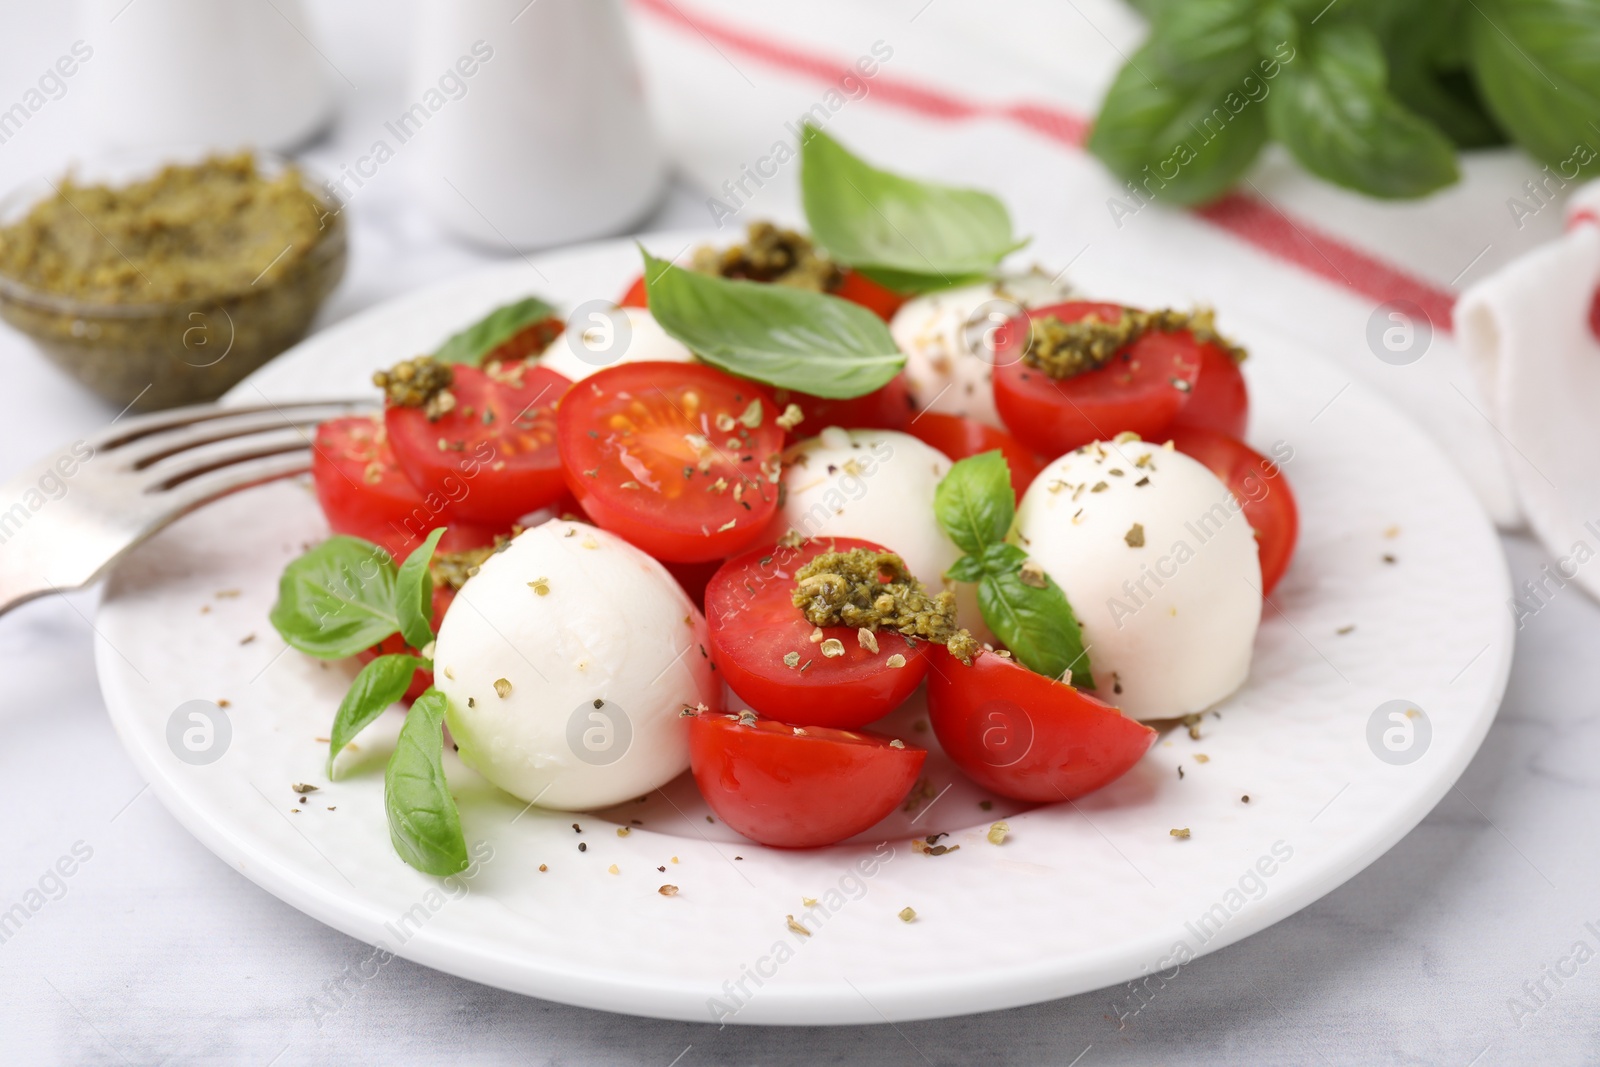 Photo of Tasty salad Caprese with tomatoes, mozzarella balls and basil on white table, closeup